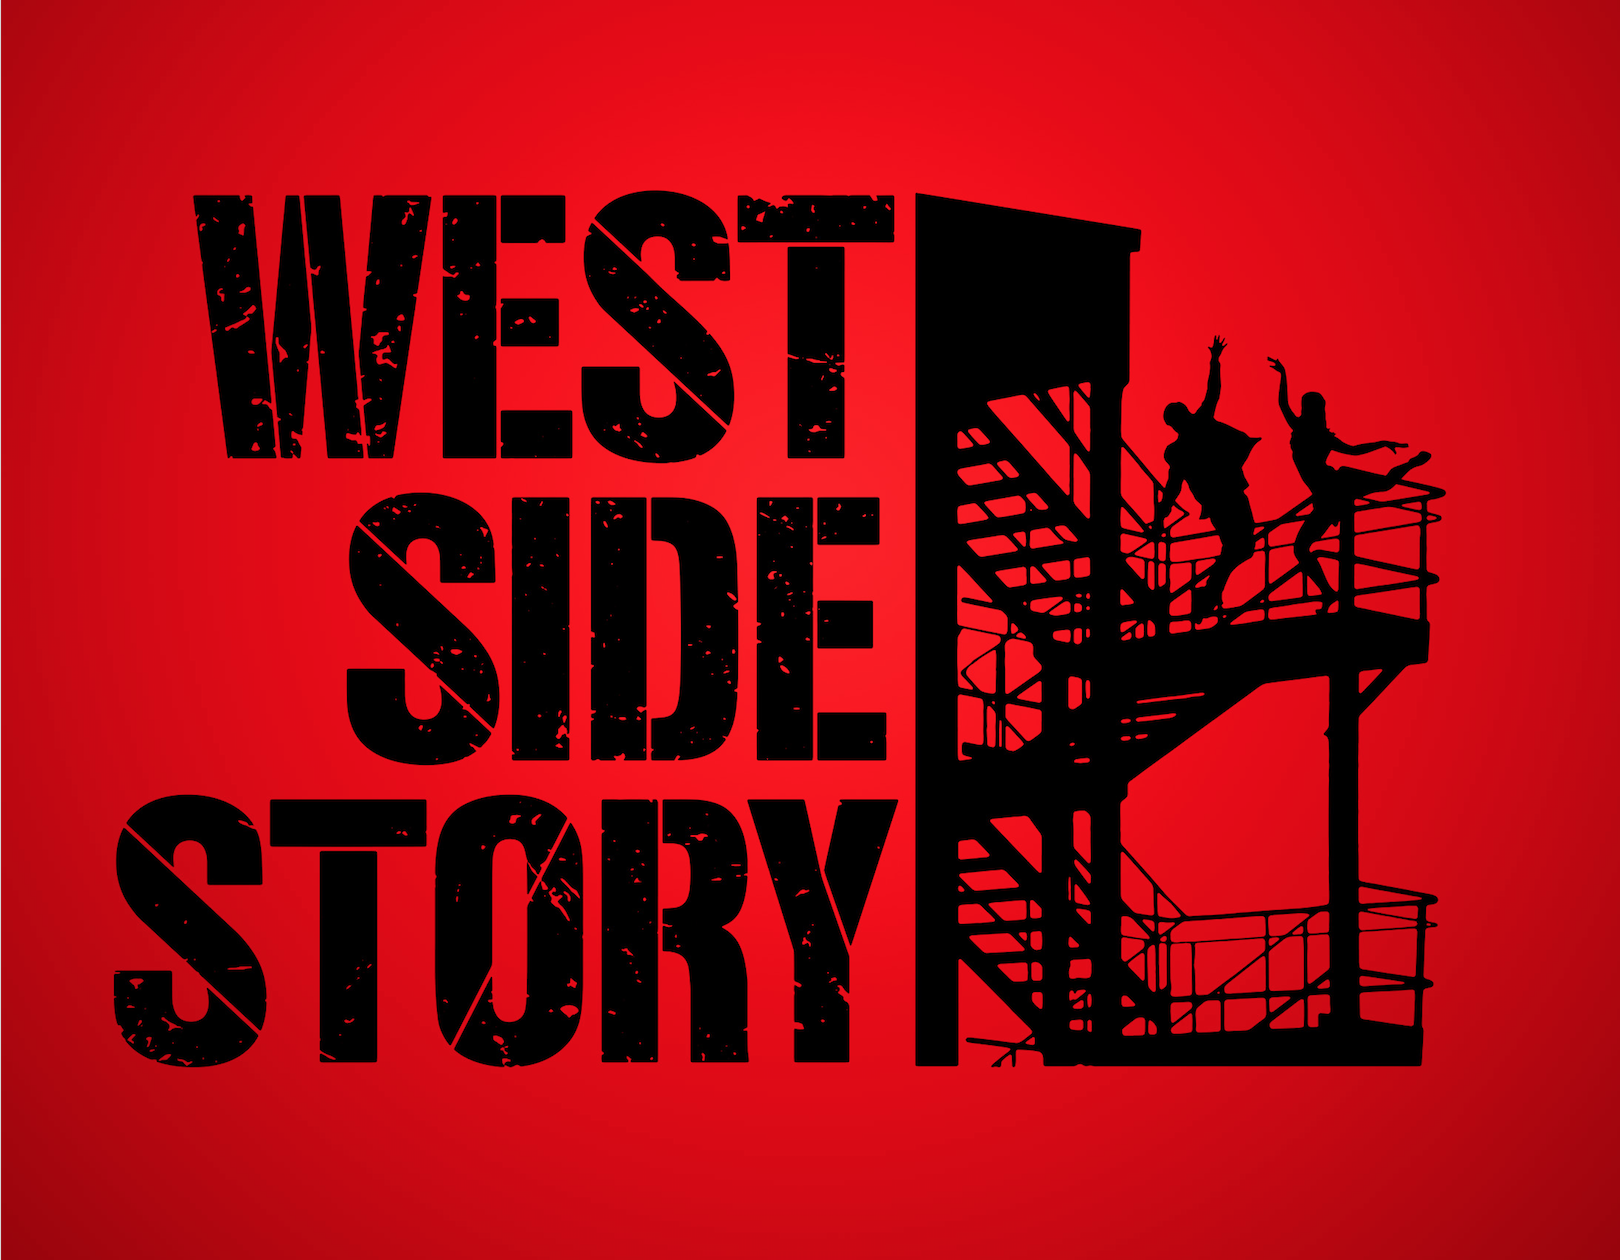 West Side story. West Side story 1957. West Side story 1961. W stories